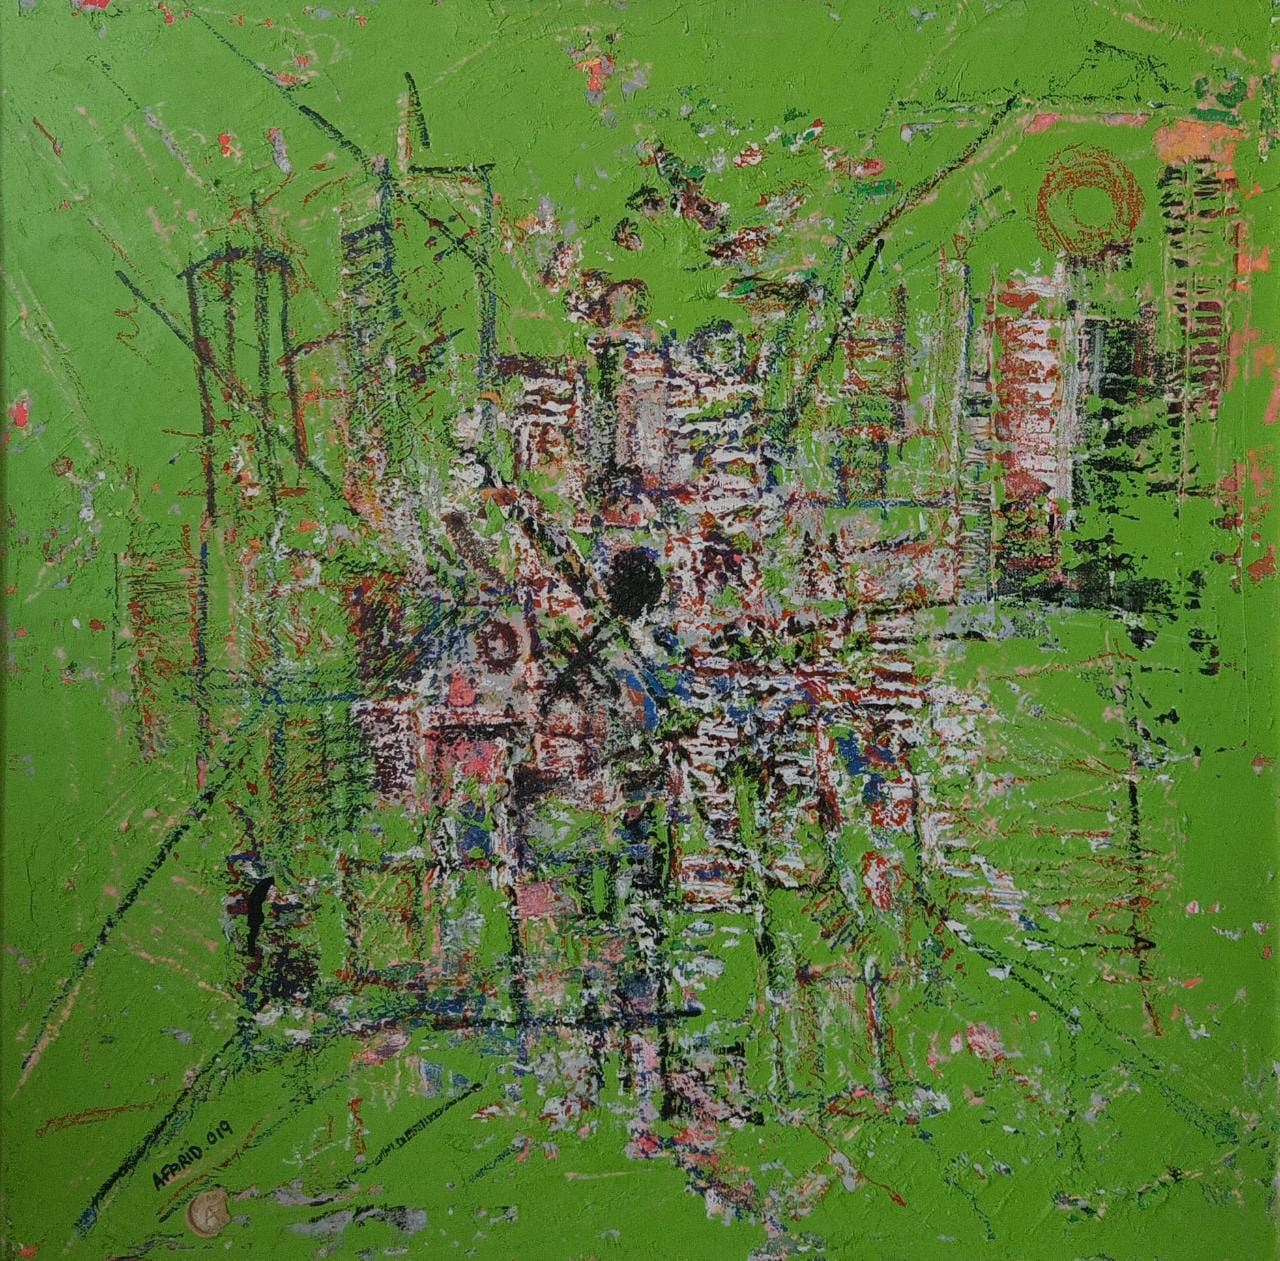 AHMED FARID / Untitled / 80 x 80 cm / Oil on canvas / LE 80,000 / USD 5,100 / PALESTINE-104